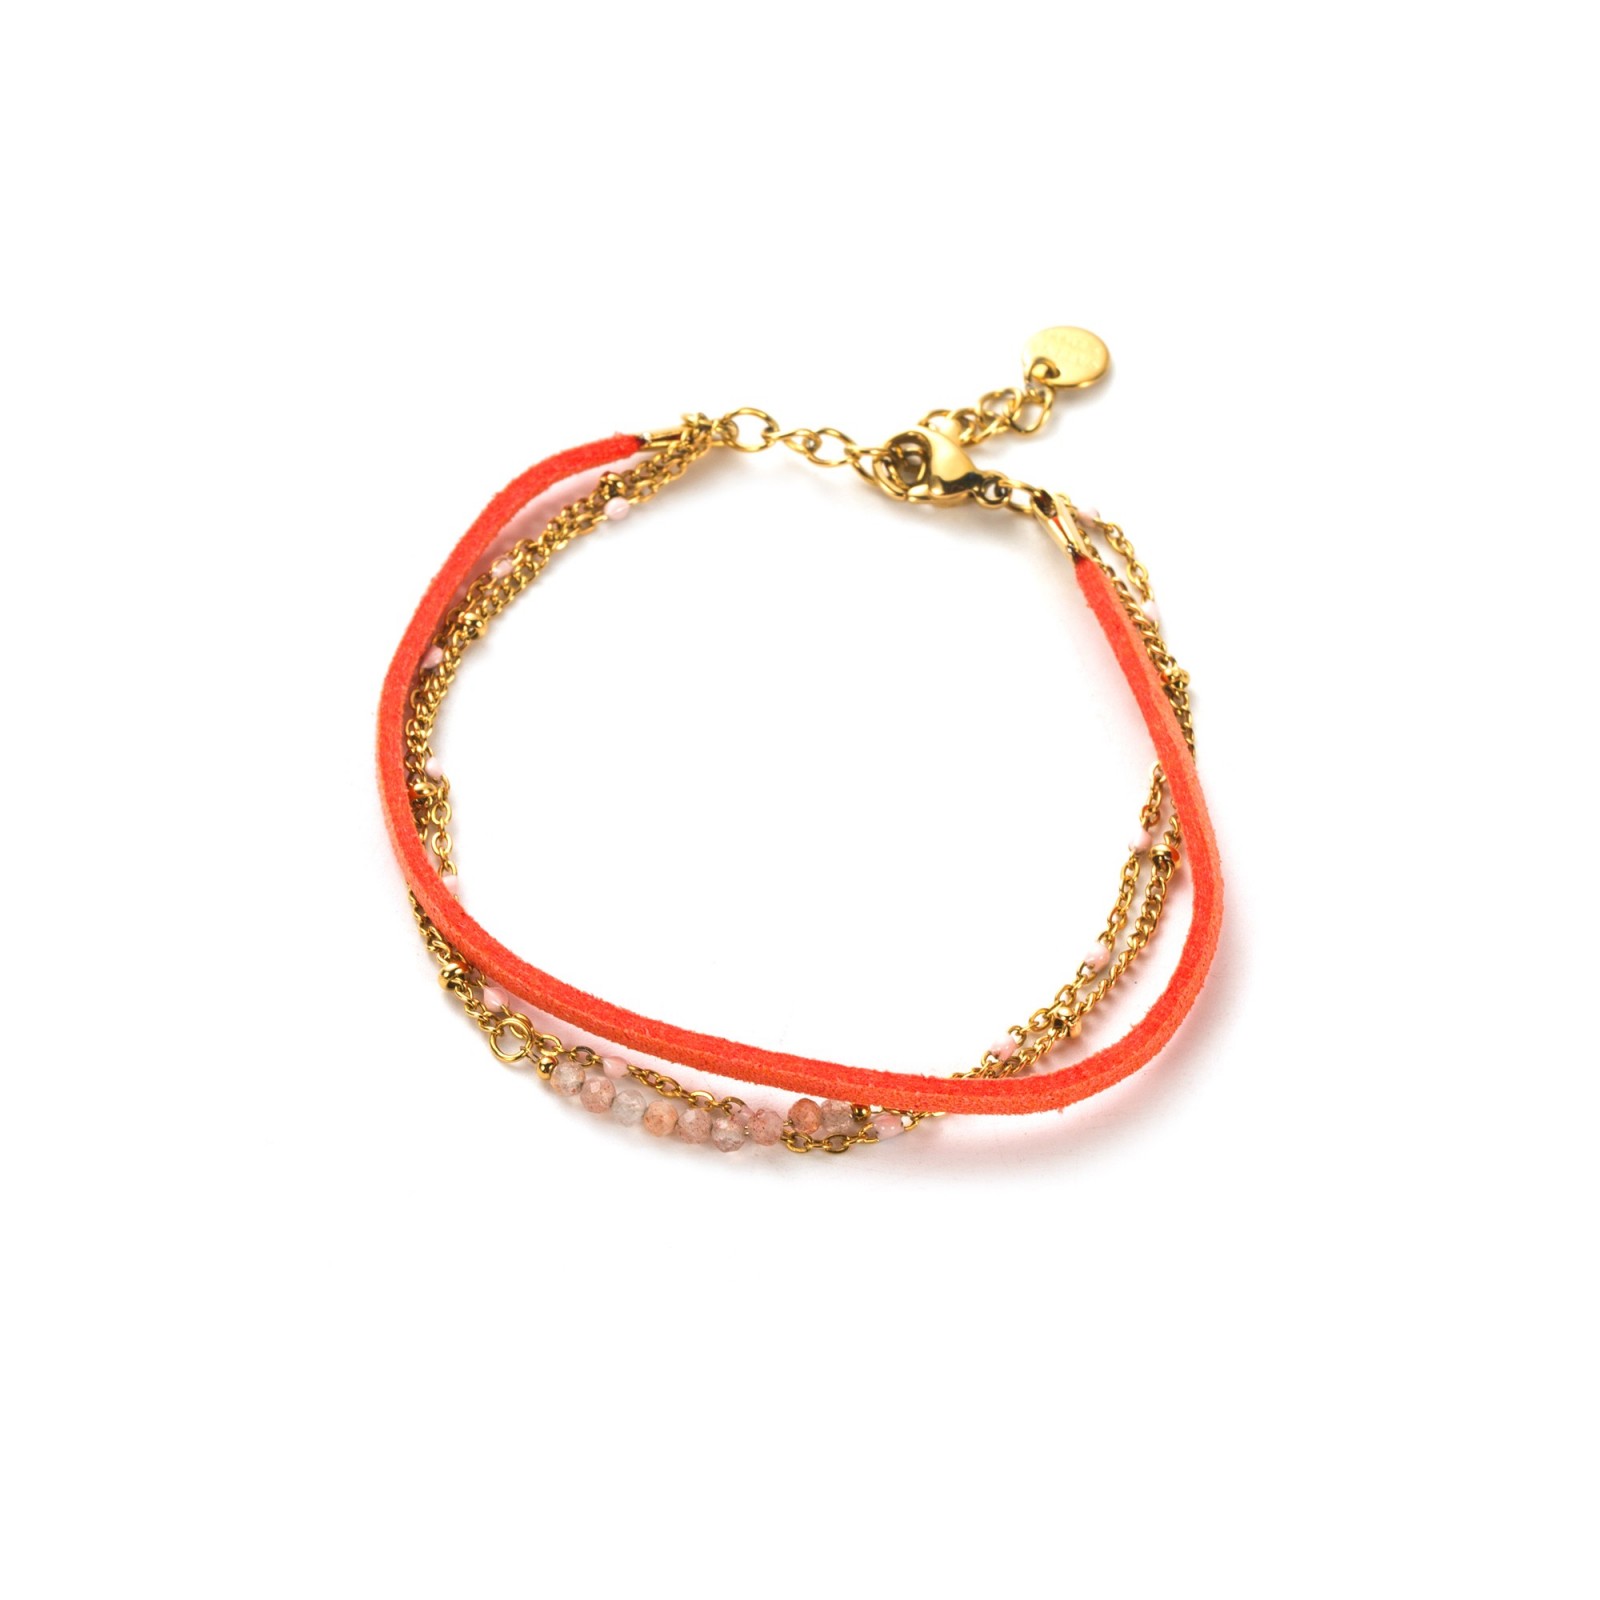 Bracelet Color:Coral